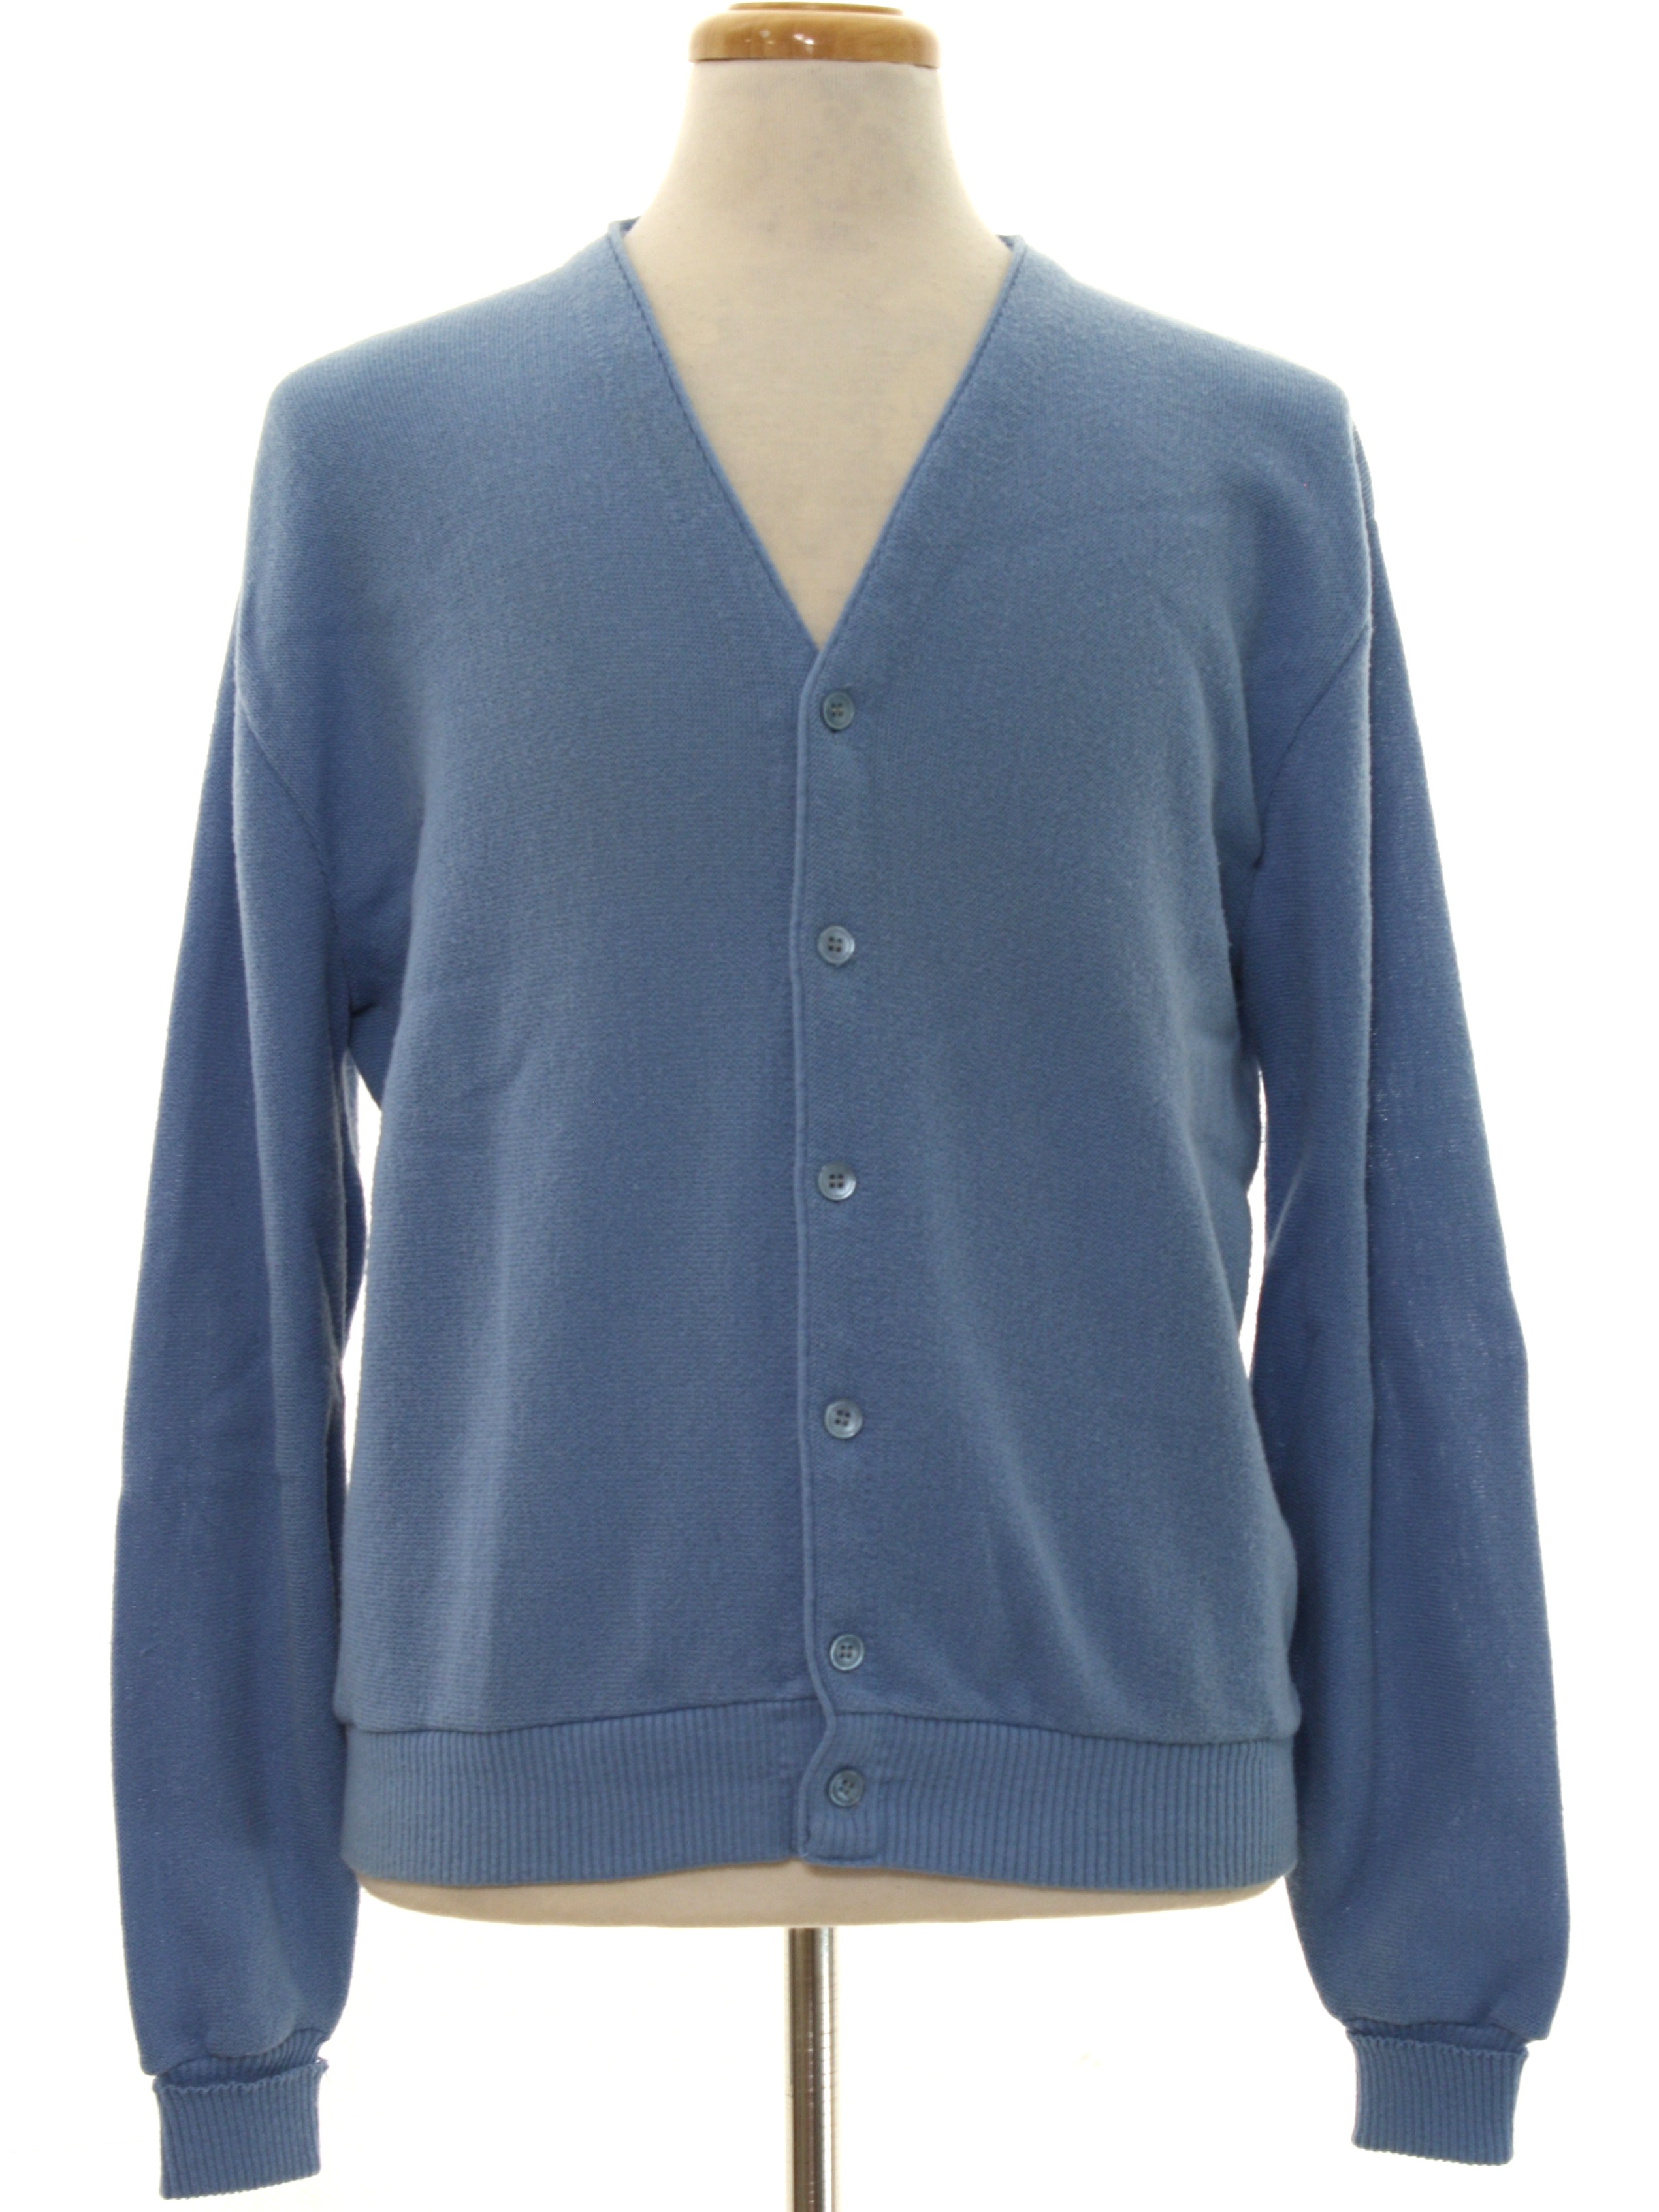 Retro 1970's Sweater (Jantzen) : 70s -Jantzen- Mens Lake blue acrylic ...